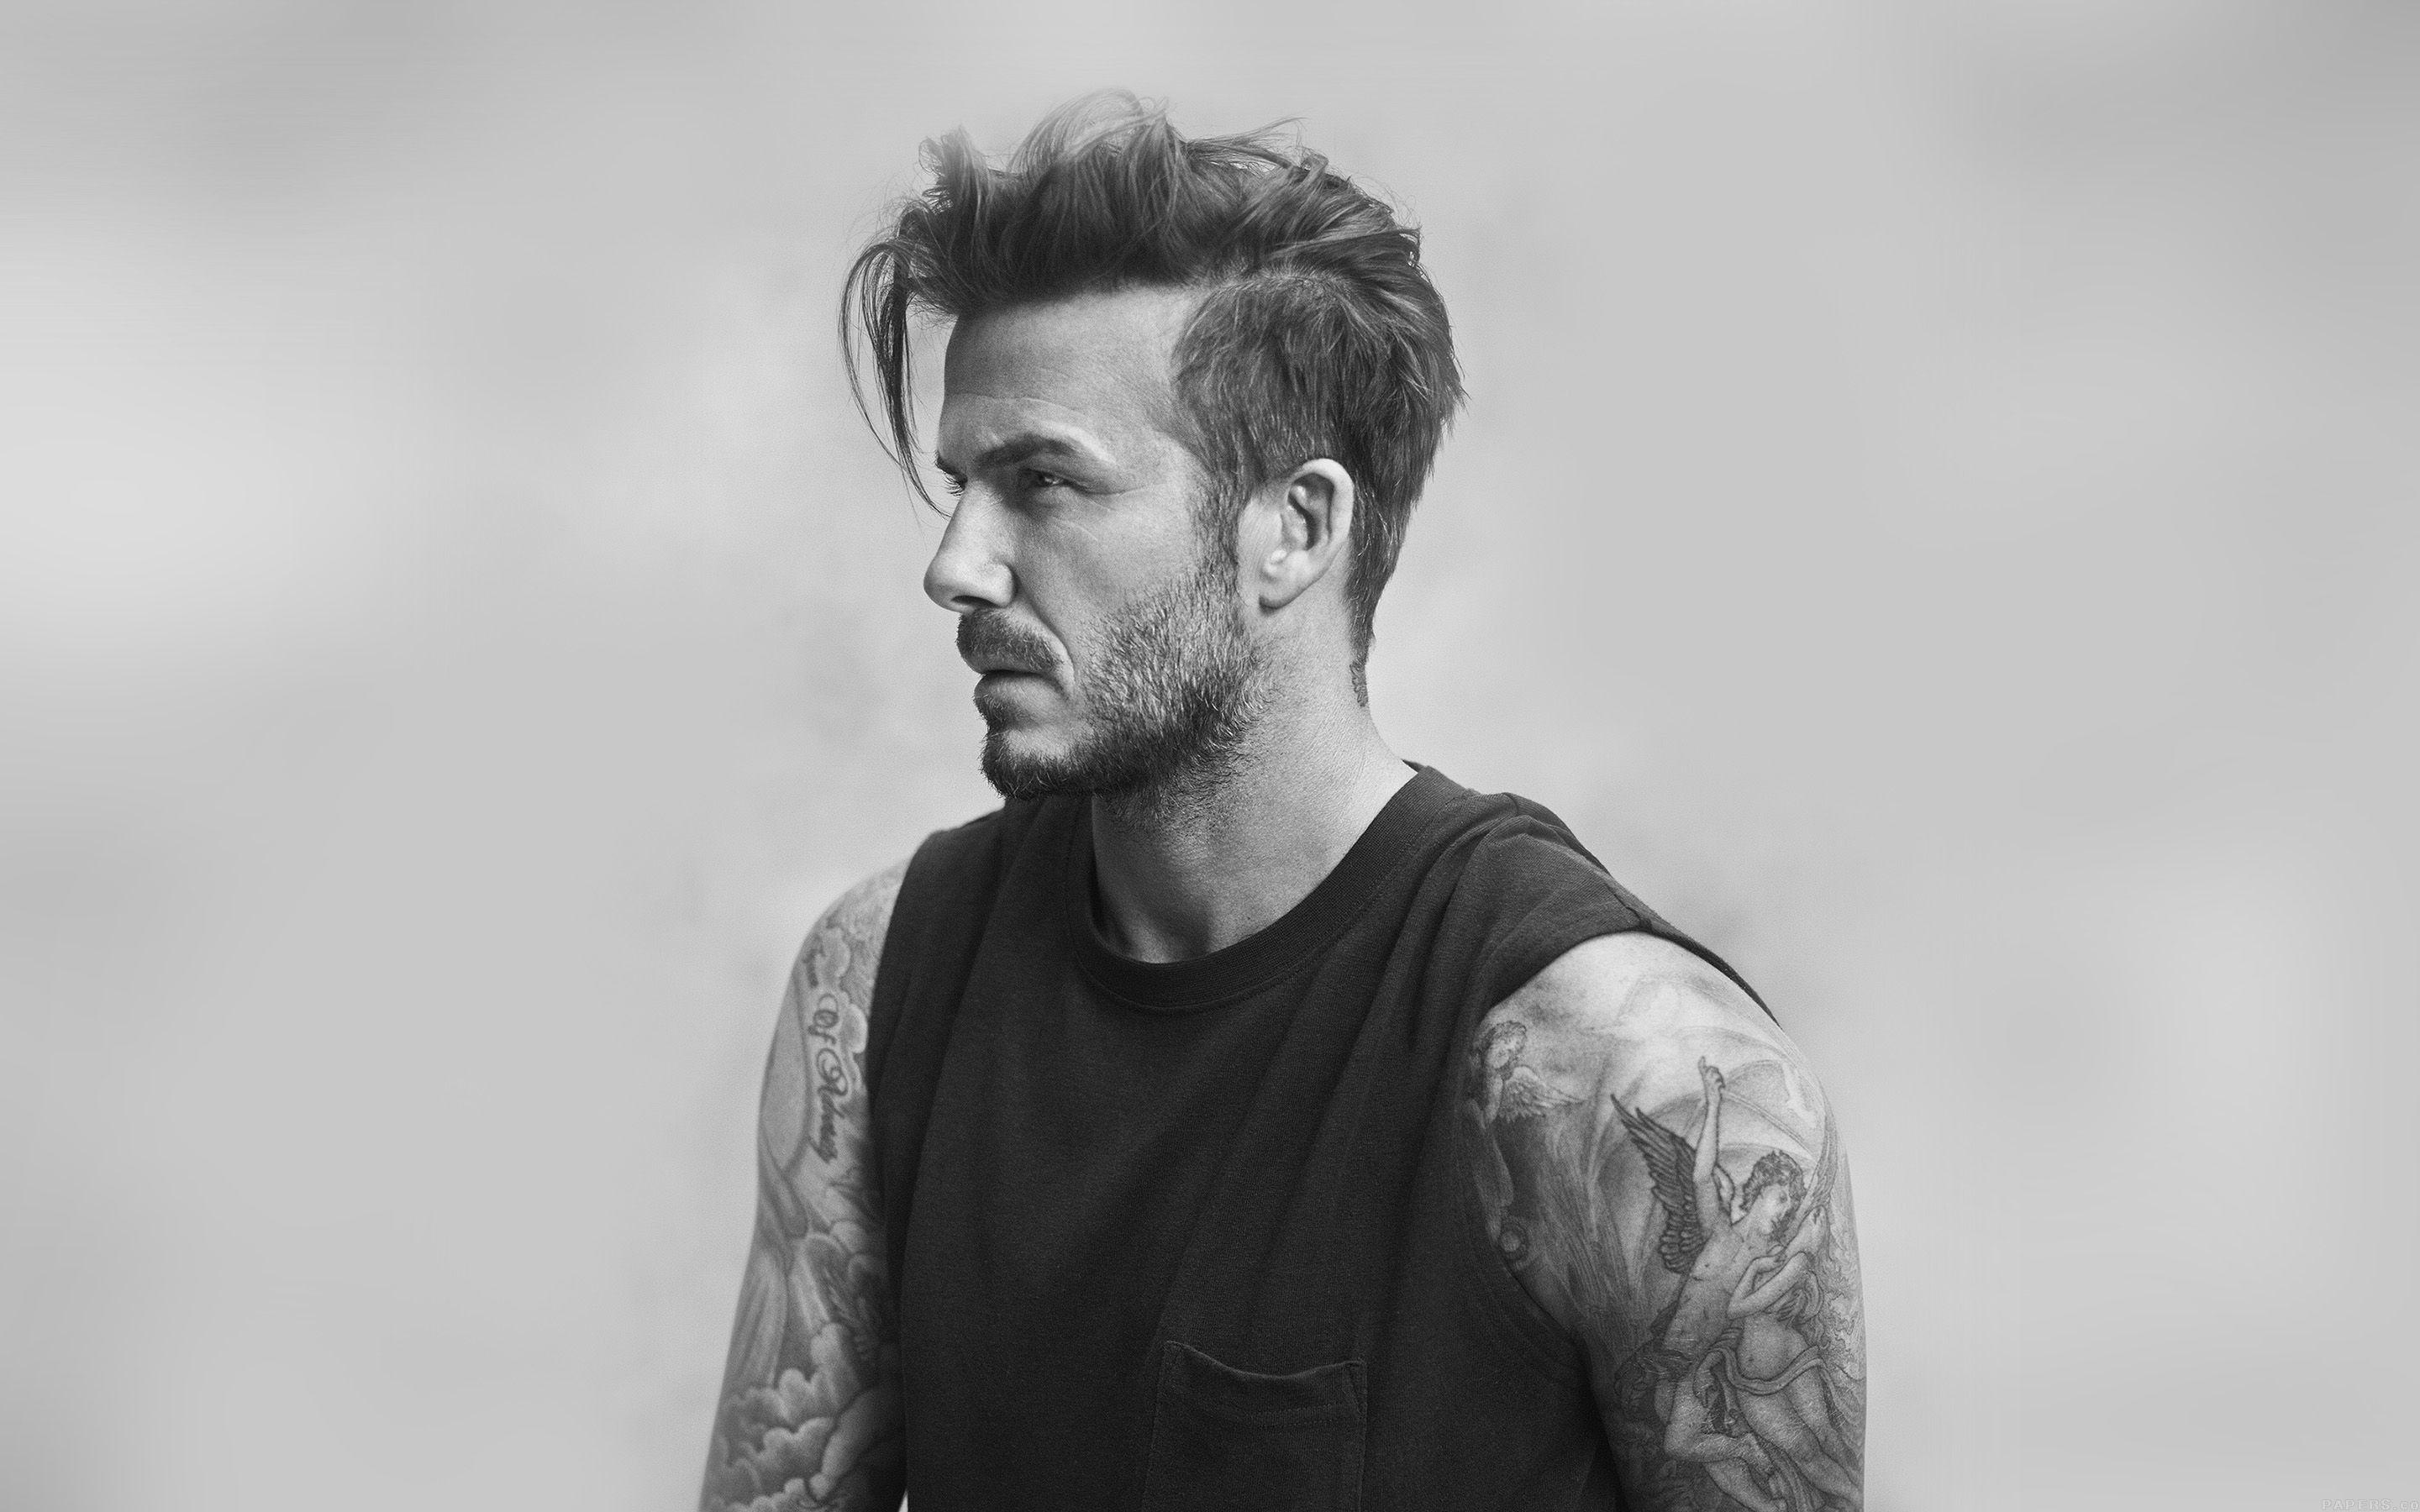 David Beckham Wallpapers - Top Free David Beckham Backgrounds